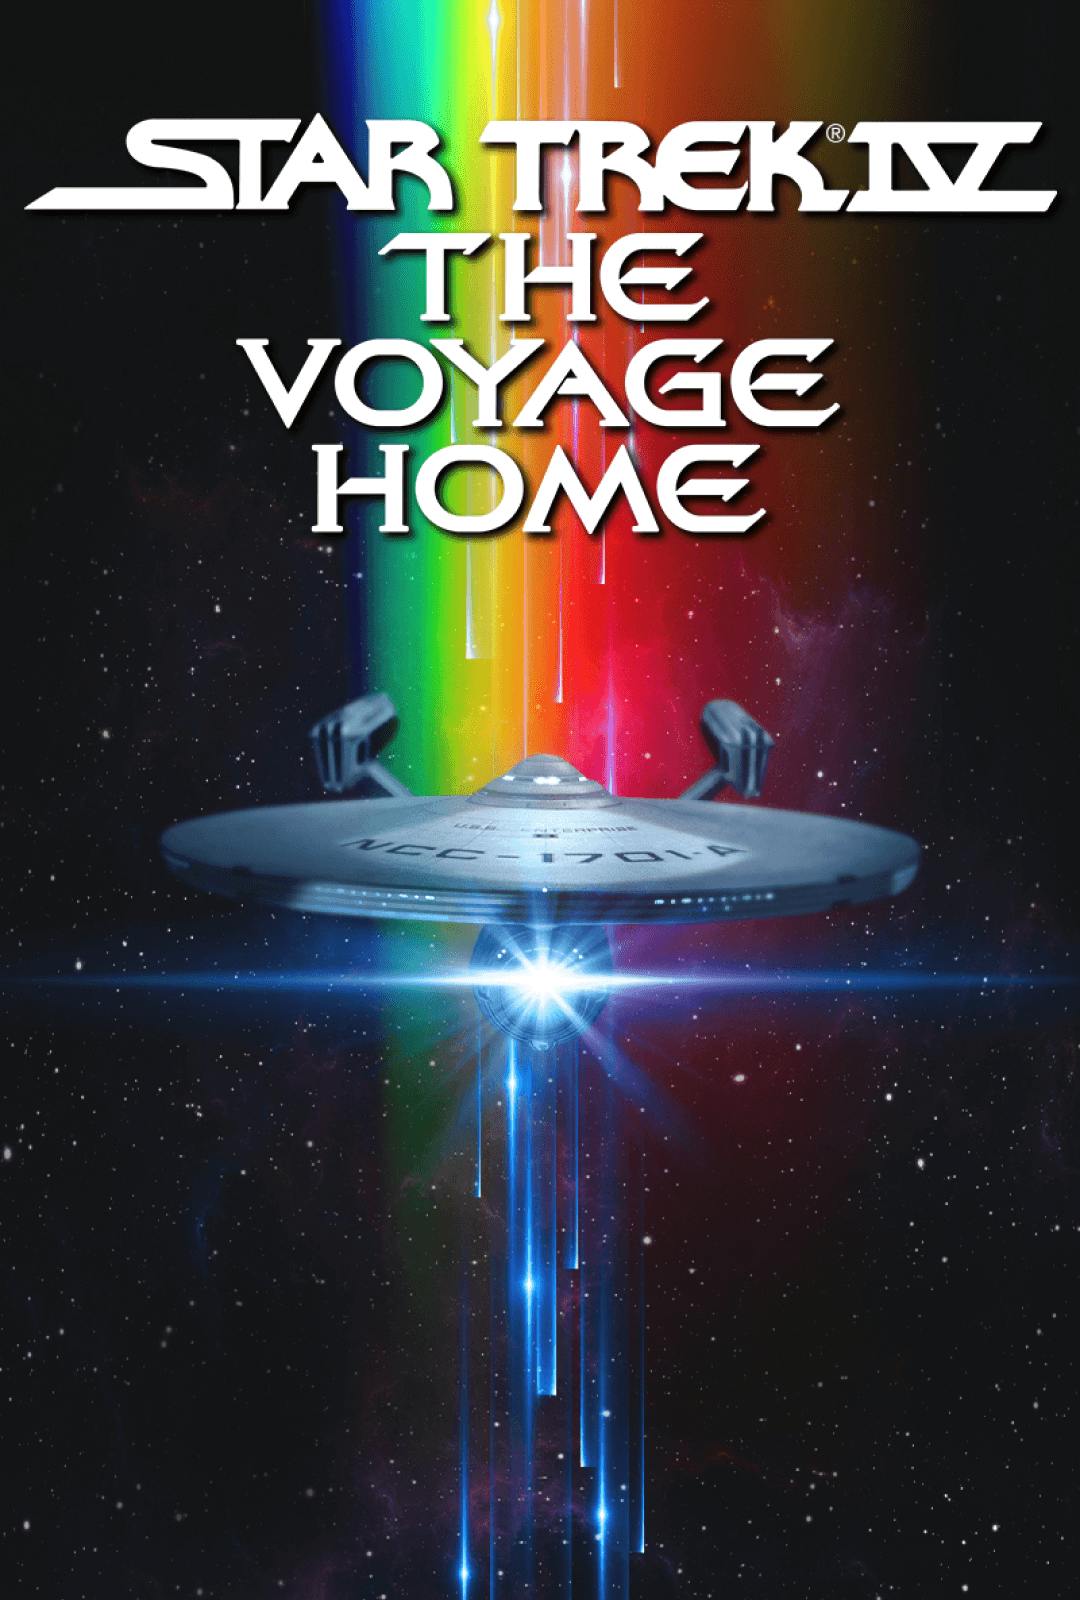 Poster Art for Star Trek IV: The Voyage Home